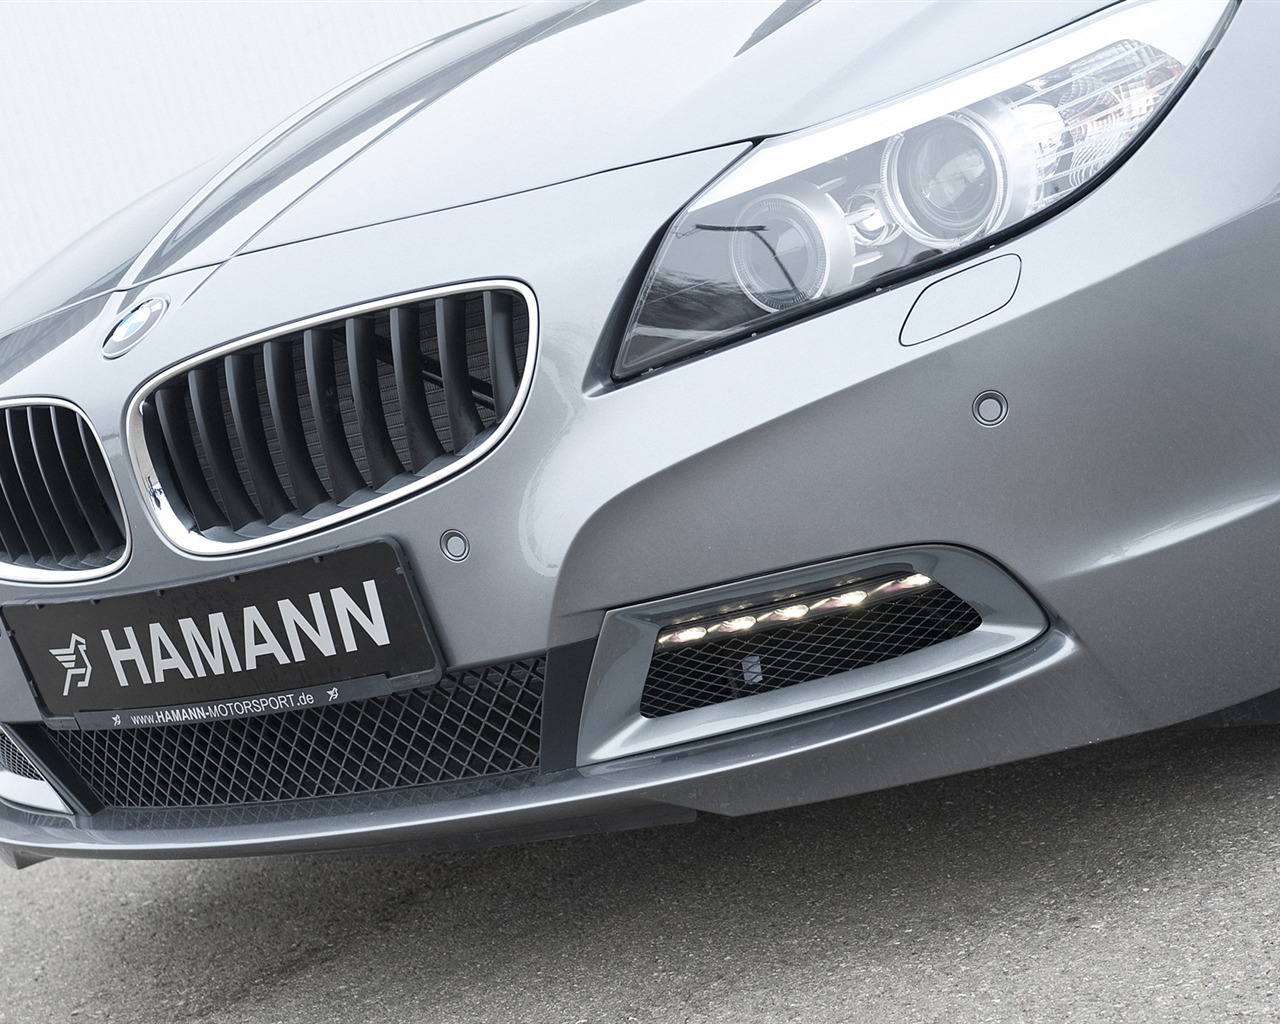 Hamann BMW Z4 E89 - 2010 宝马16 - 1280x1024